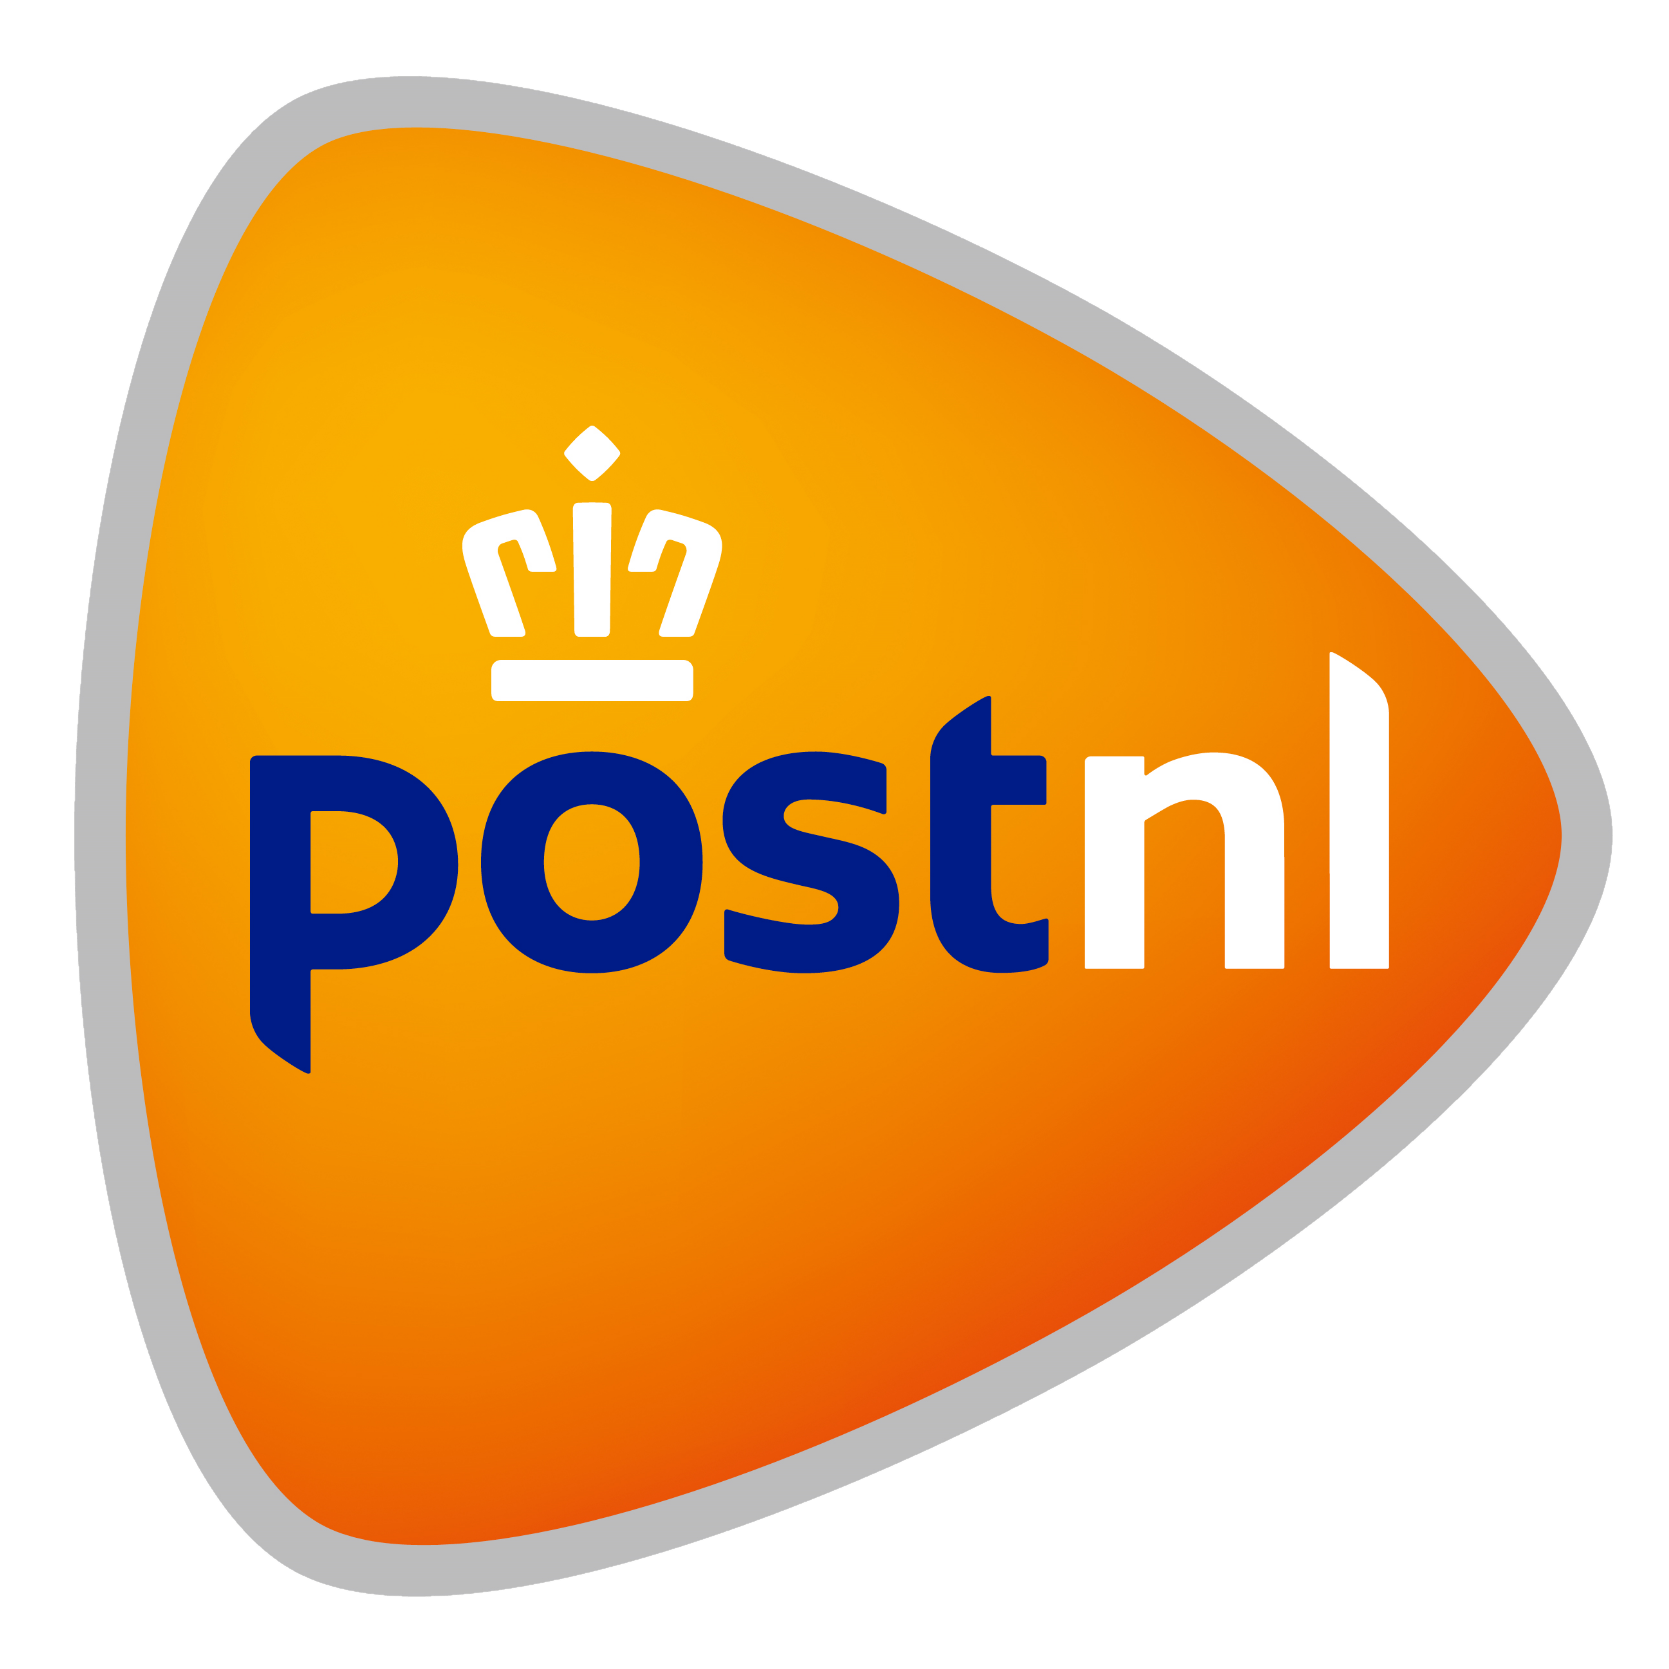 Postnl PNG-PlusPNG.com-220